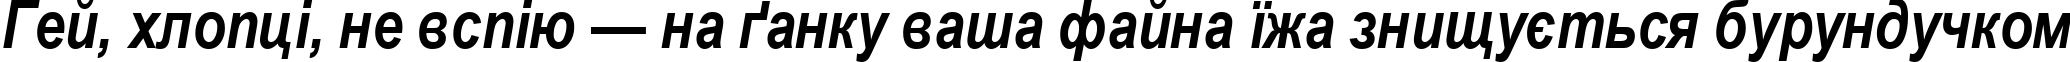 Пример написания шрифтом Arial Narrow Bold Italic текста на украинском